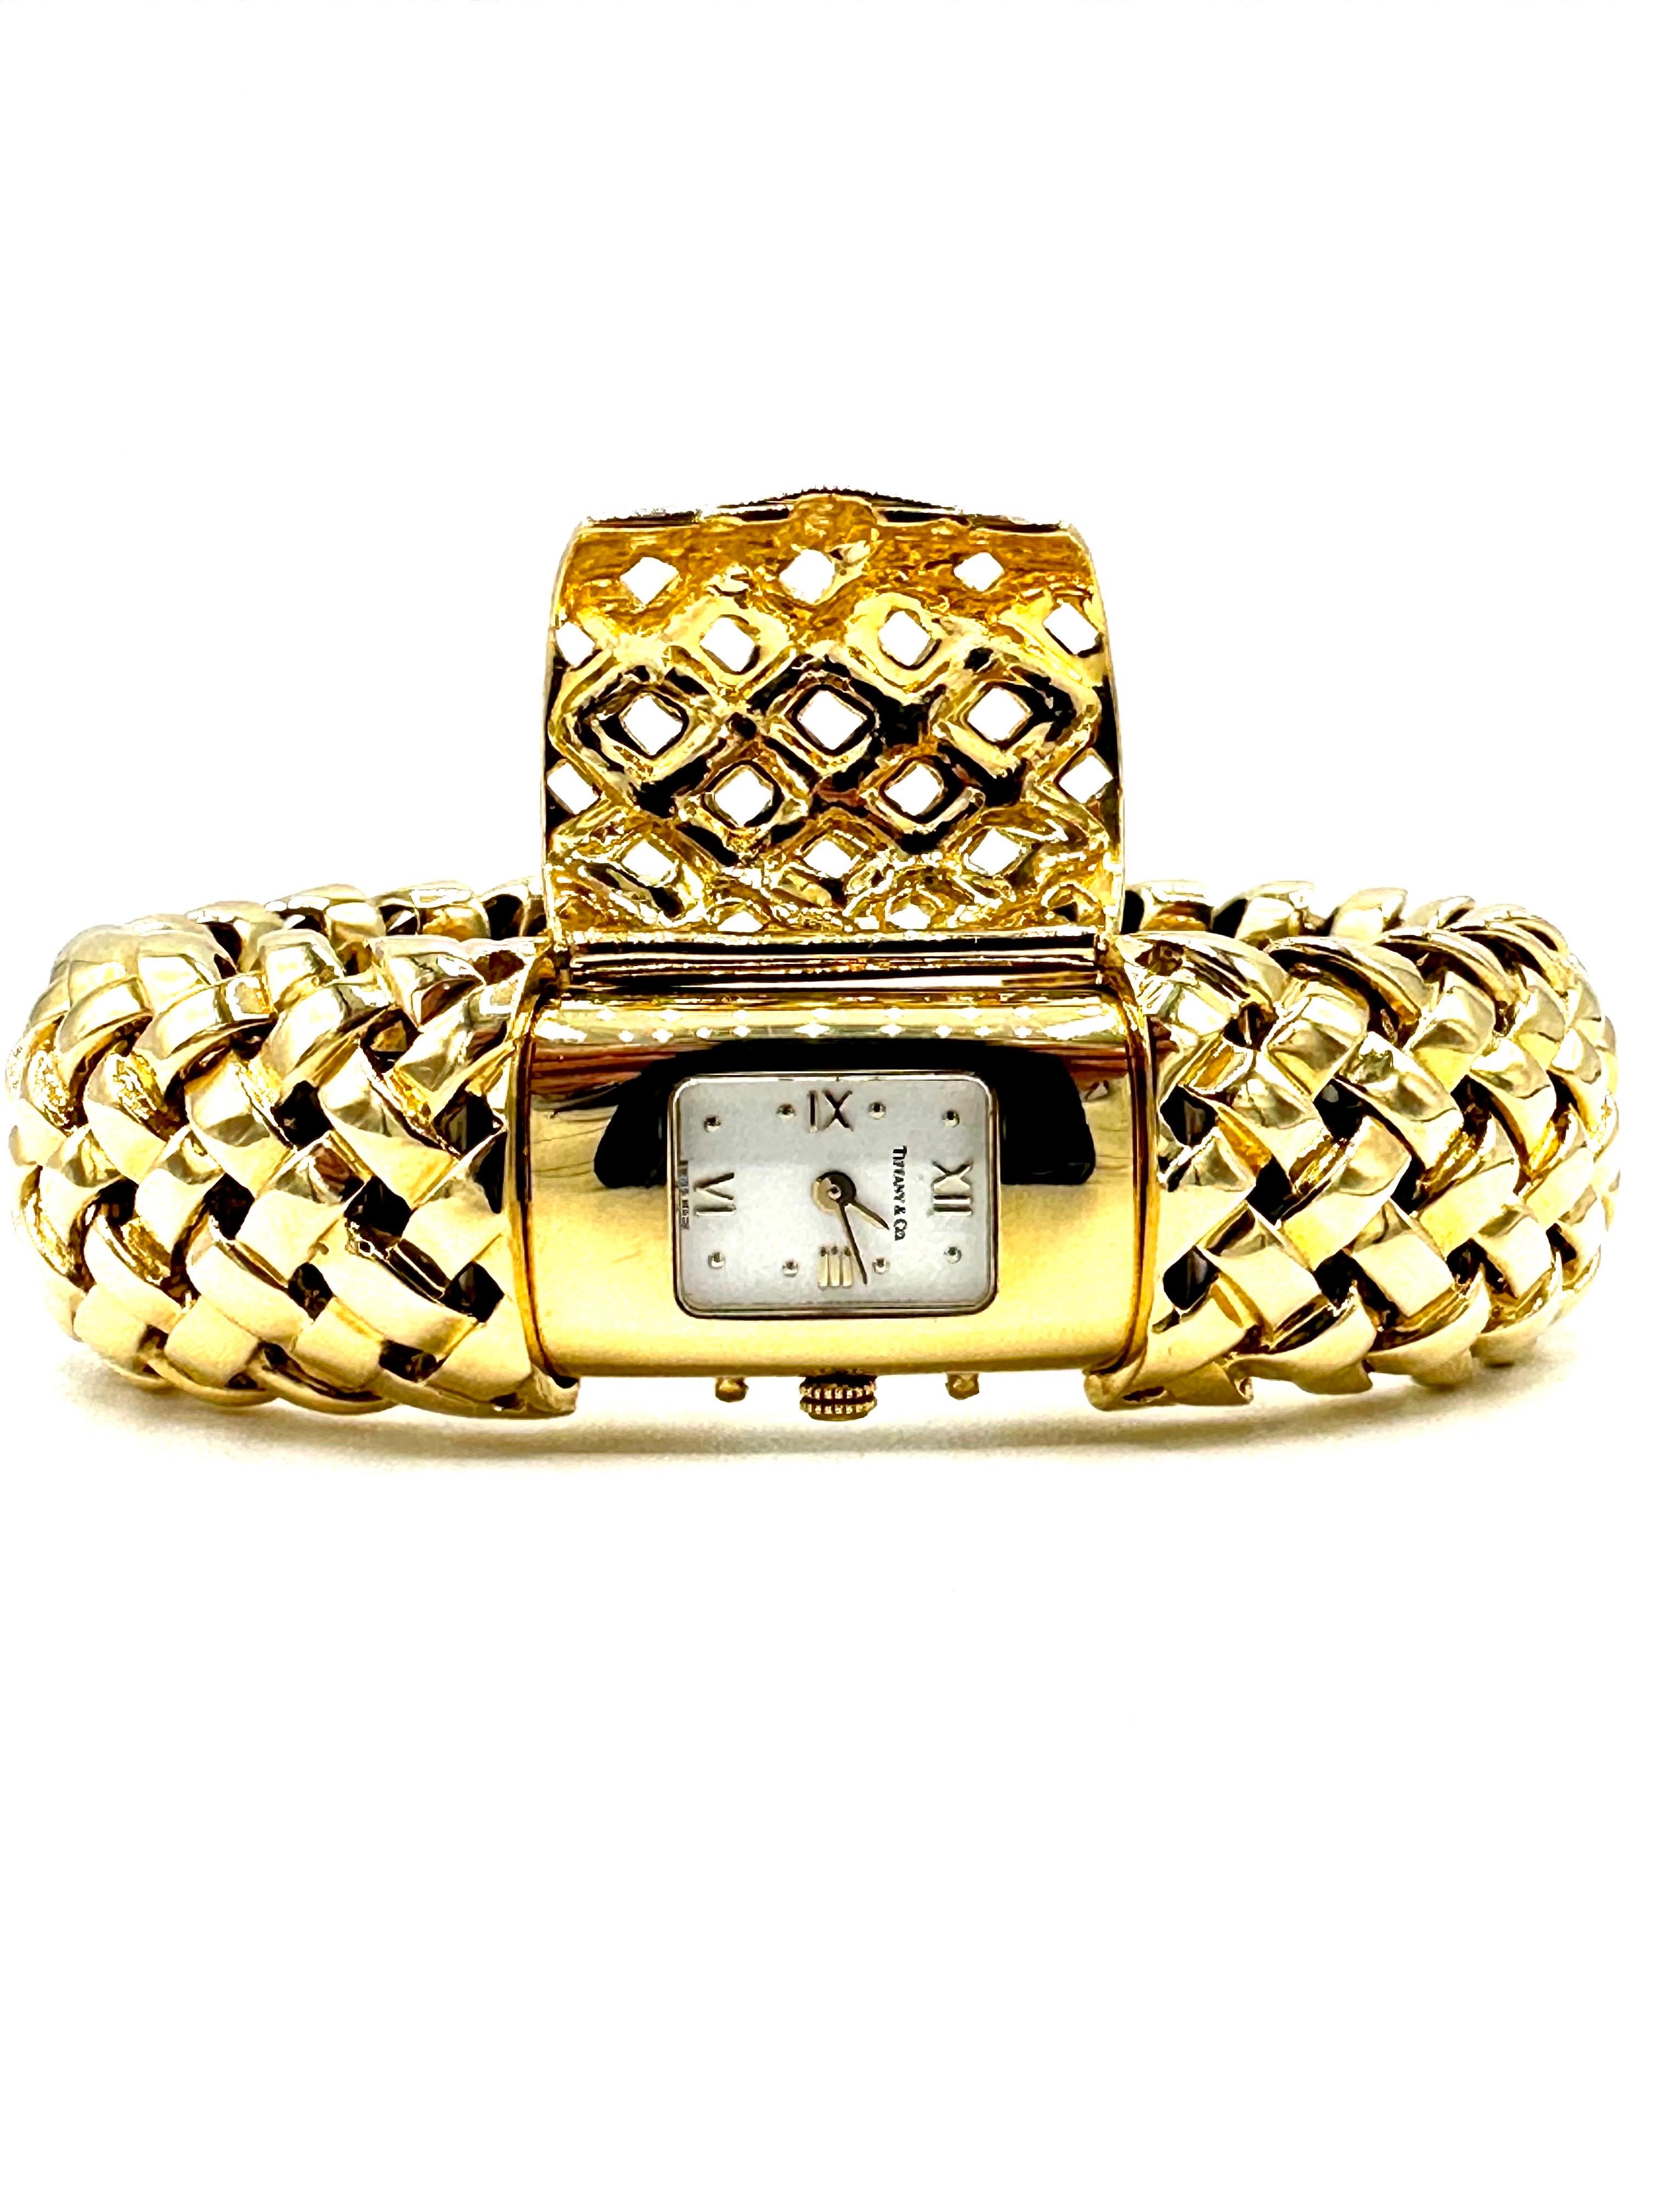 Tiffany & Co. 18k Yellow Gold Basket Weave Bangle Bracelet Watch For Sale 2